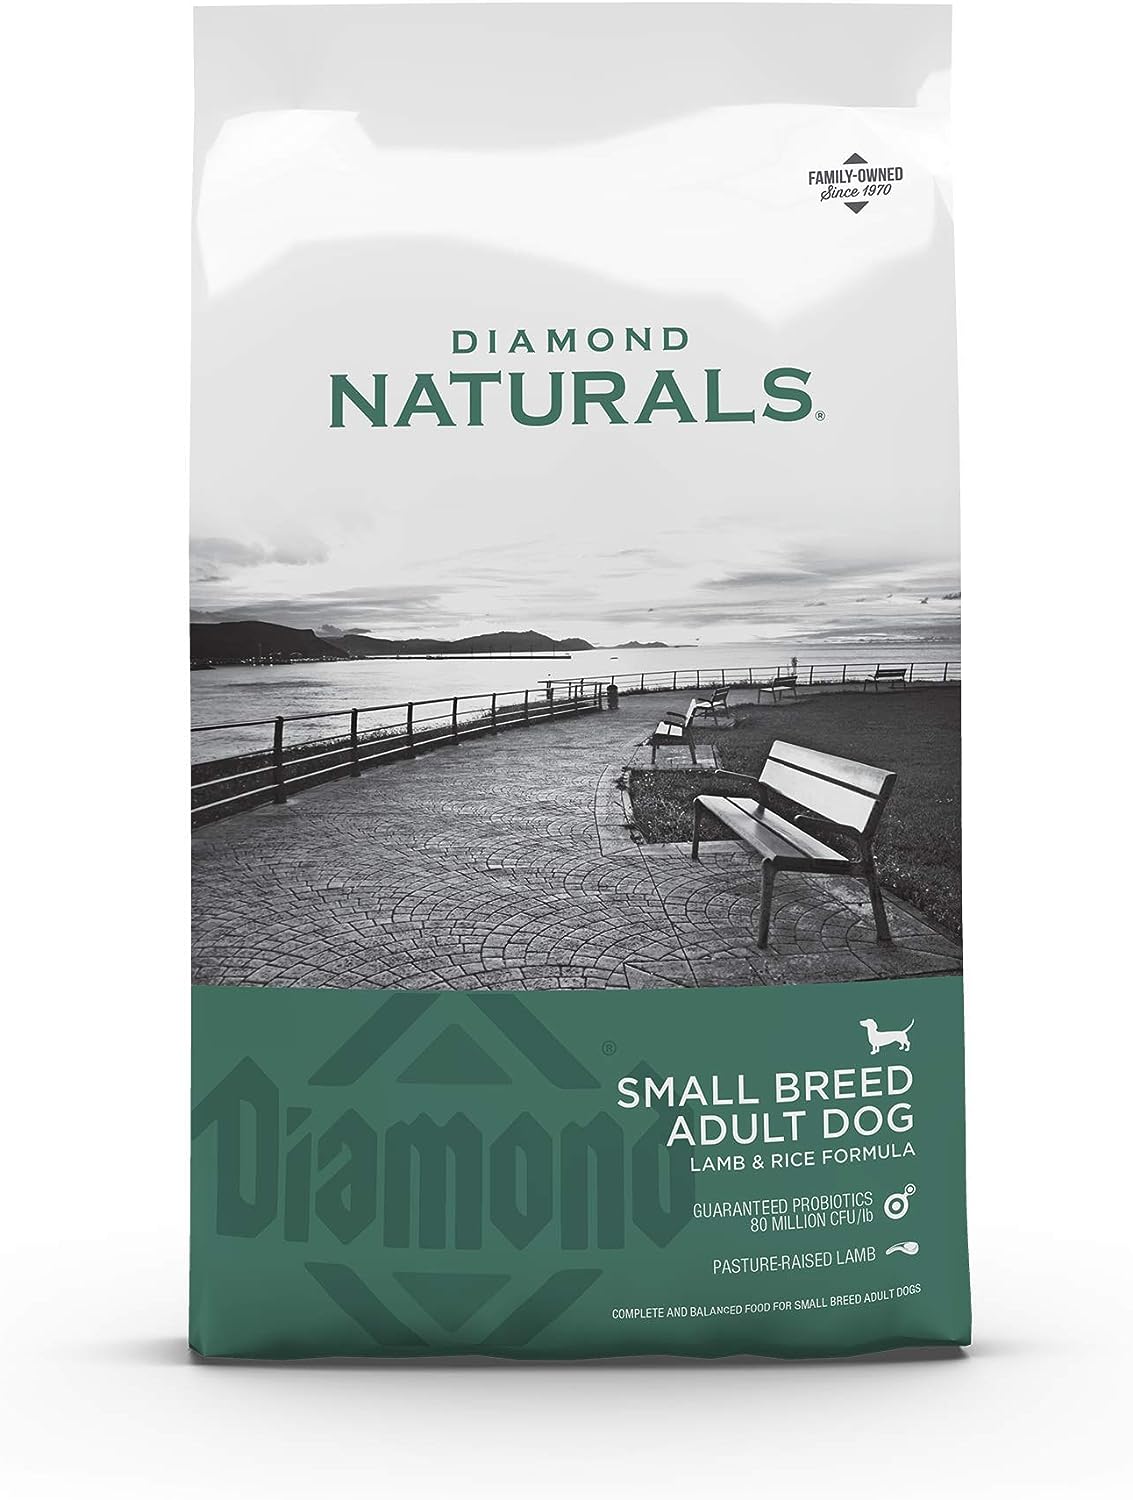 Diamond Naturals Small Breed Adult Dog Lamb & Rice Formula Dry Dog Food – Gallery Image 1